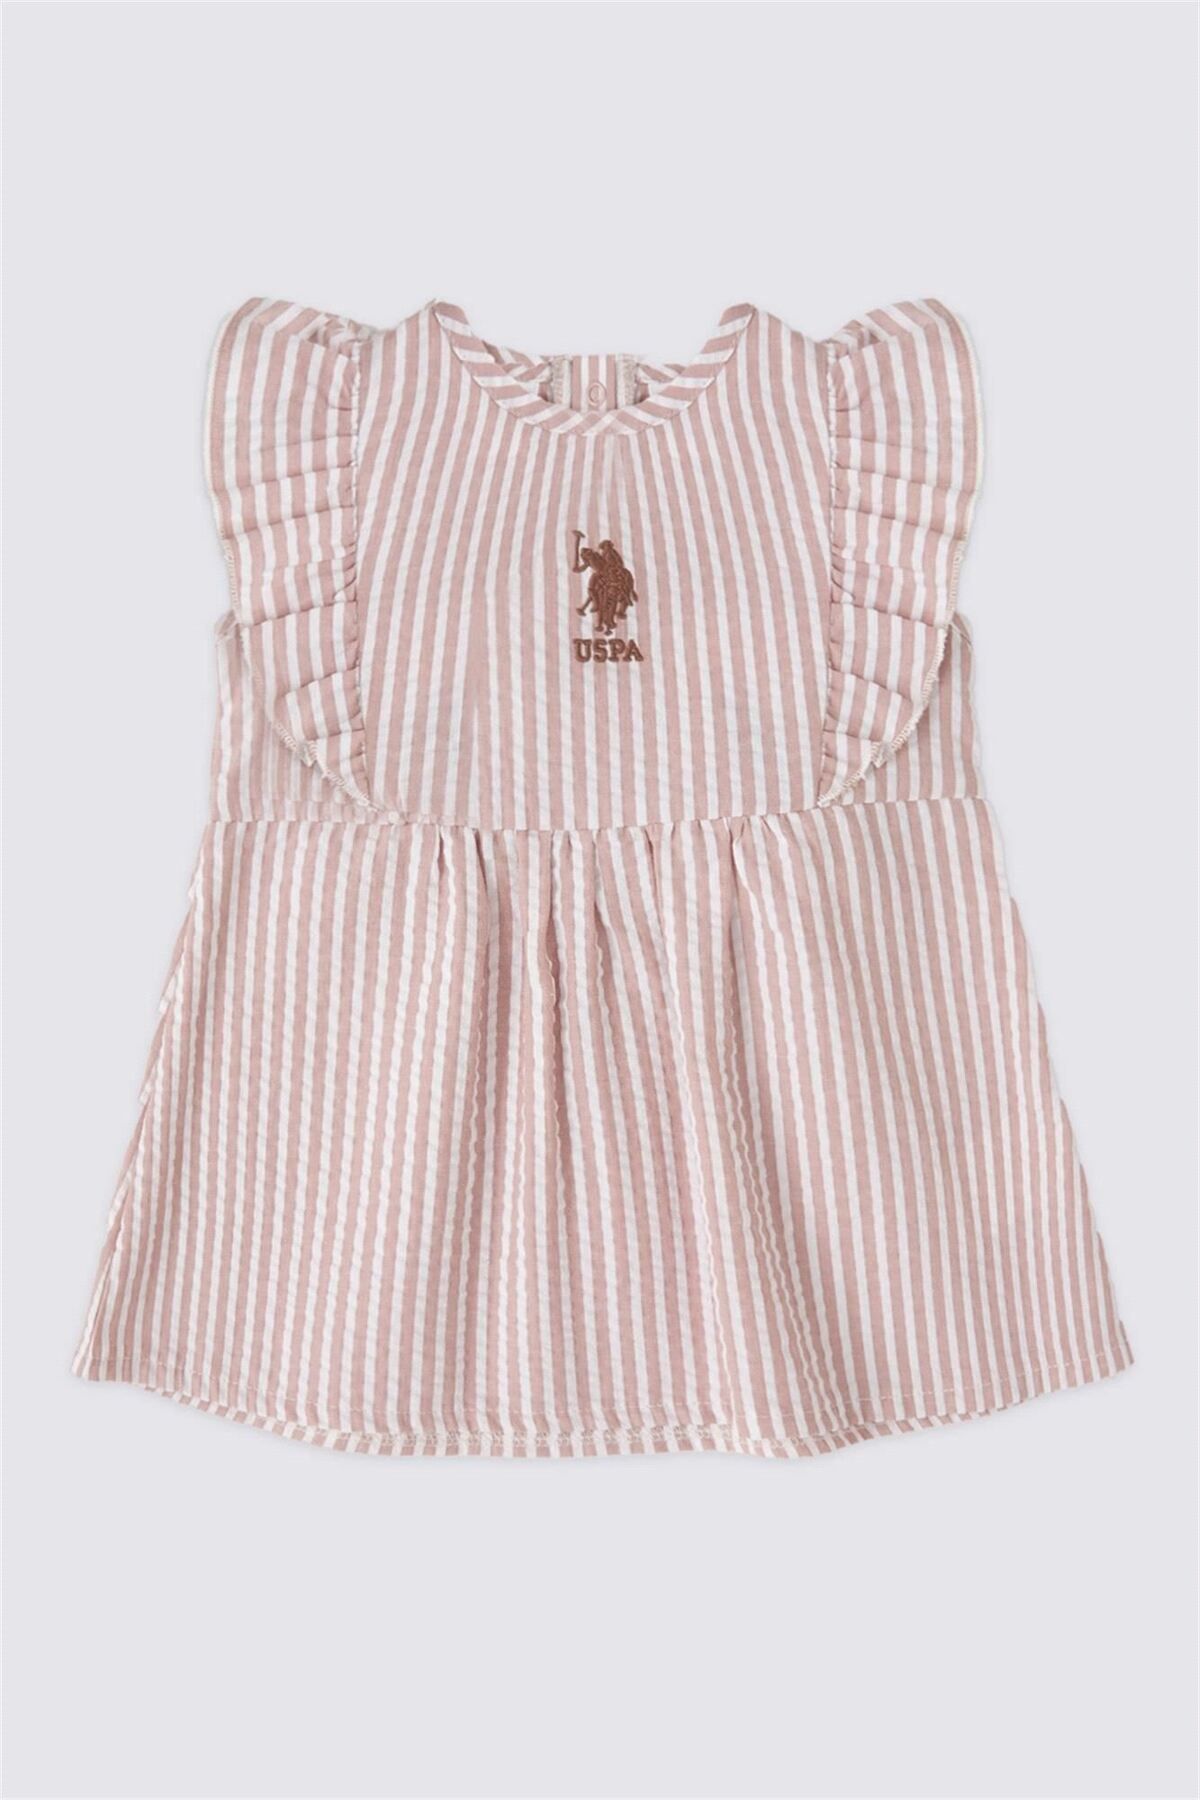 U.S. Polo Assn. U.S. Polo Assn. Kız Bebek Kolsuz Elbise Vizon USB1947